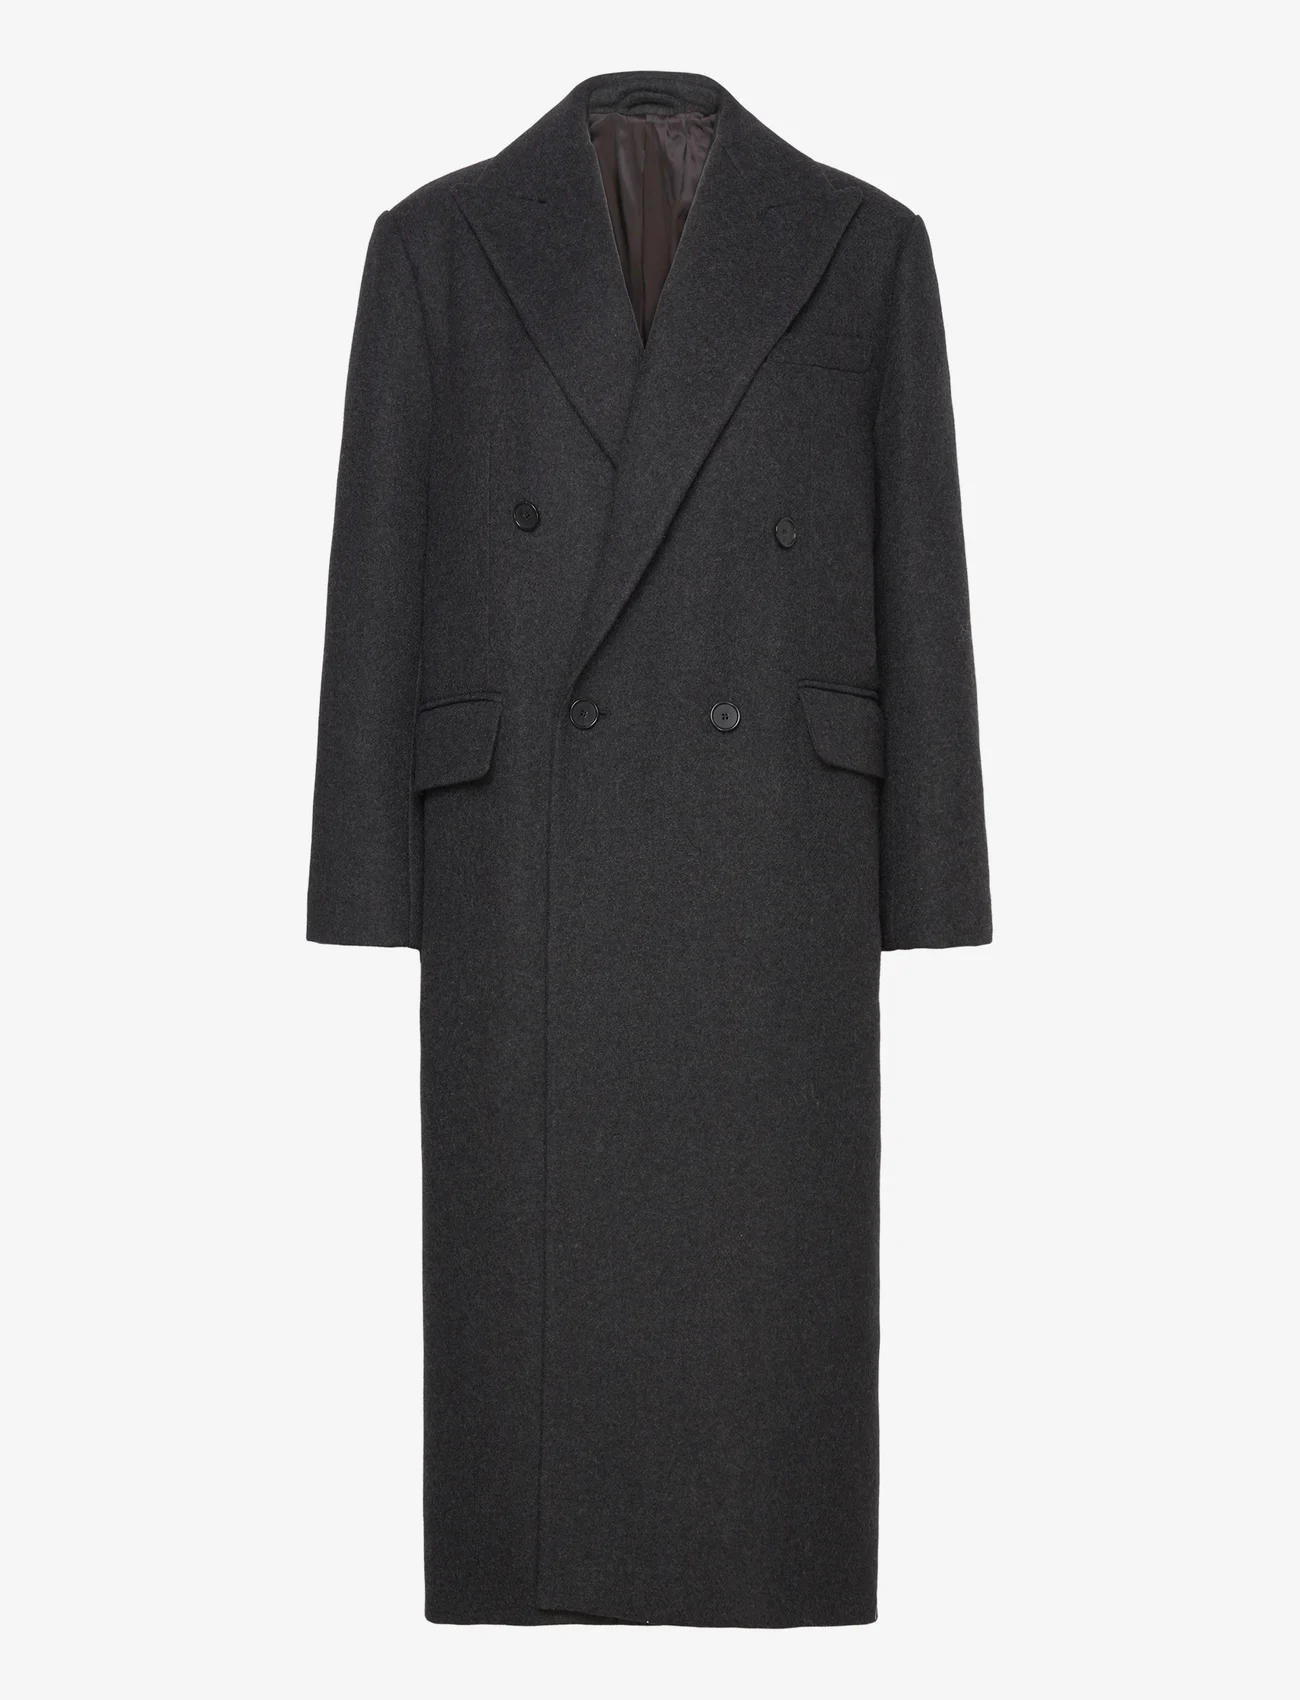 Filippa K - Tailored Coat - winter jacket - anthracite - 0